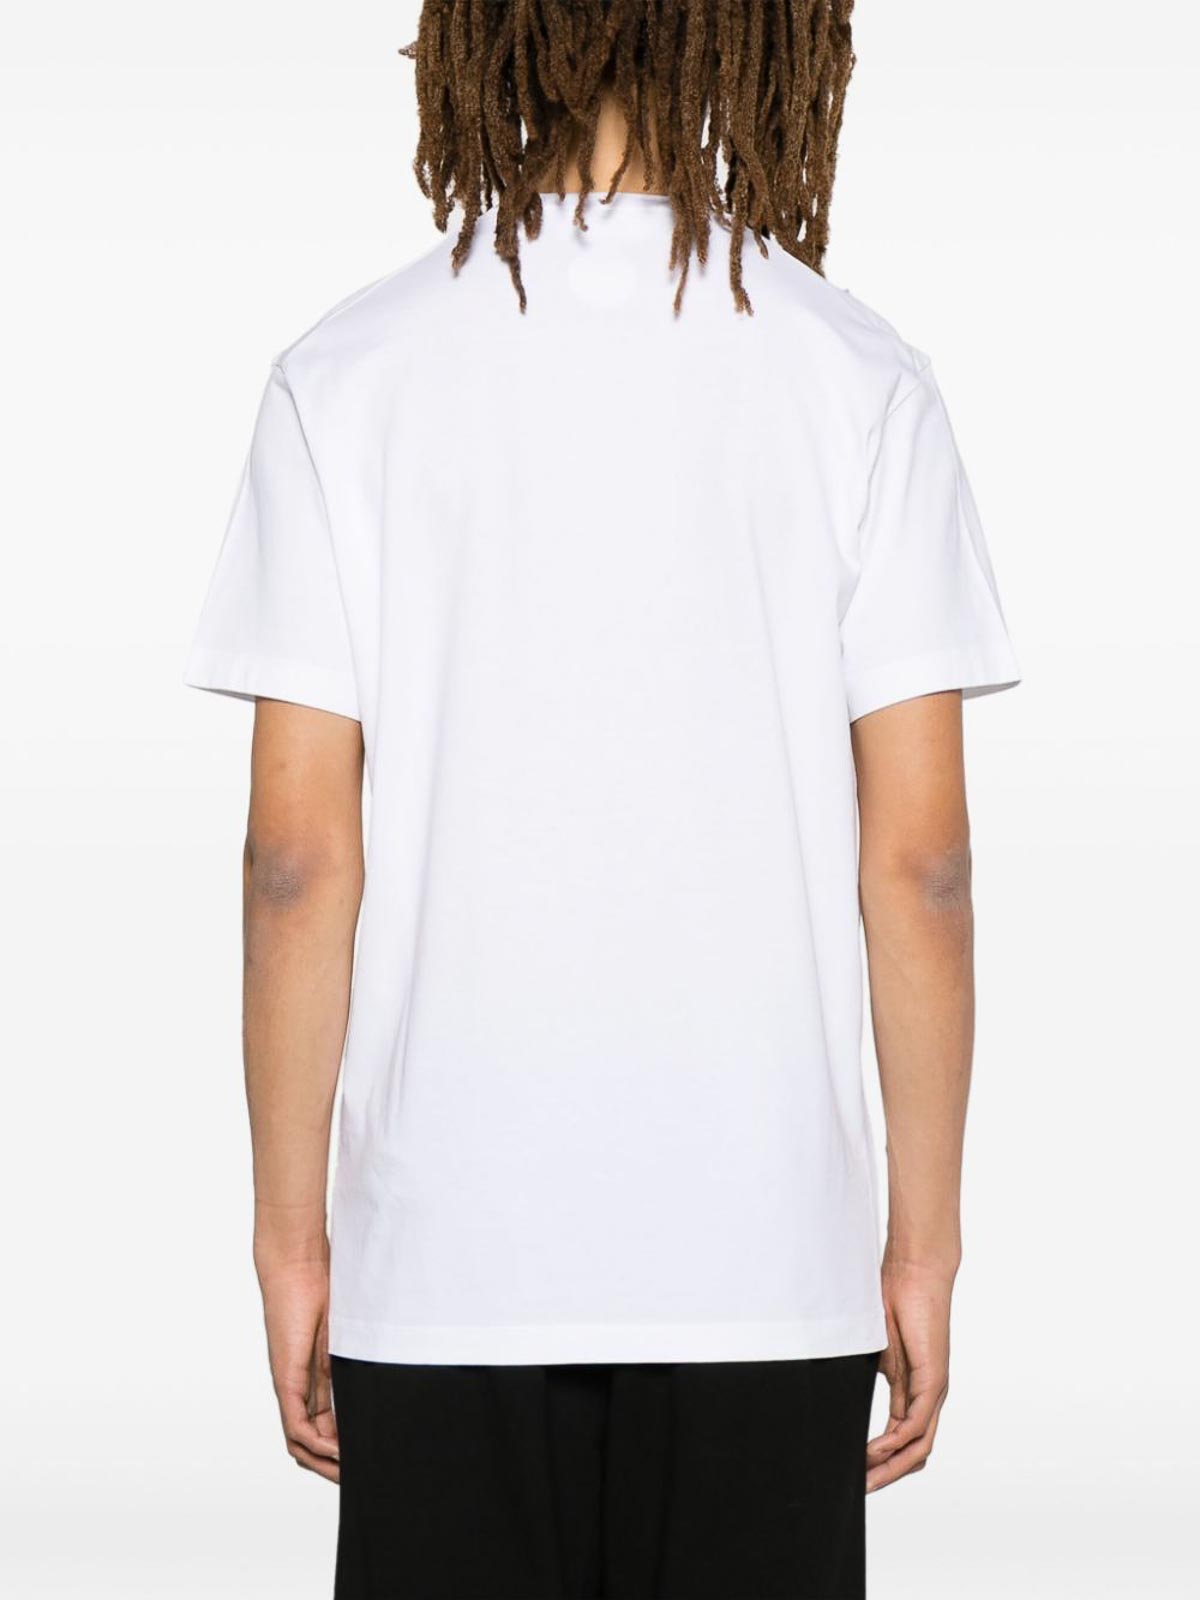 Shop Dsquared2 Ceresio 9 Cotton T-shirt In White